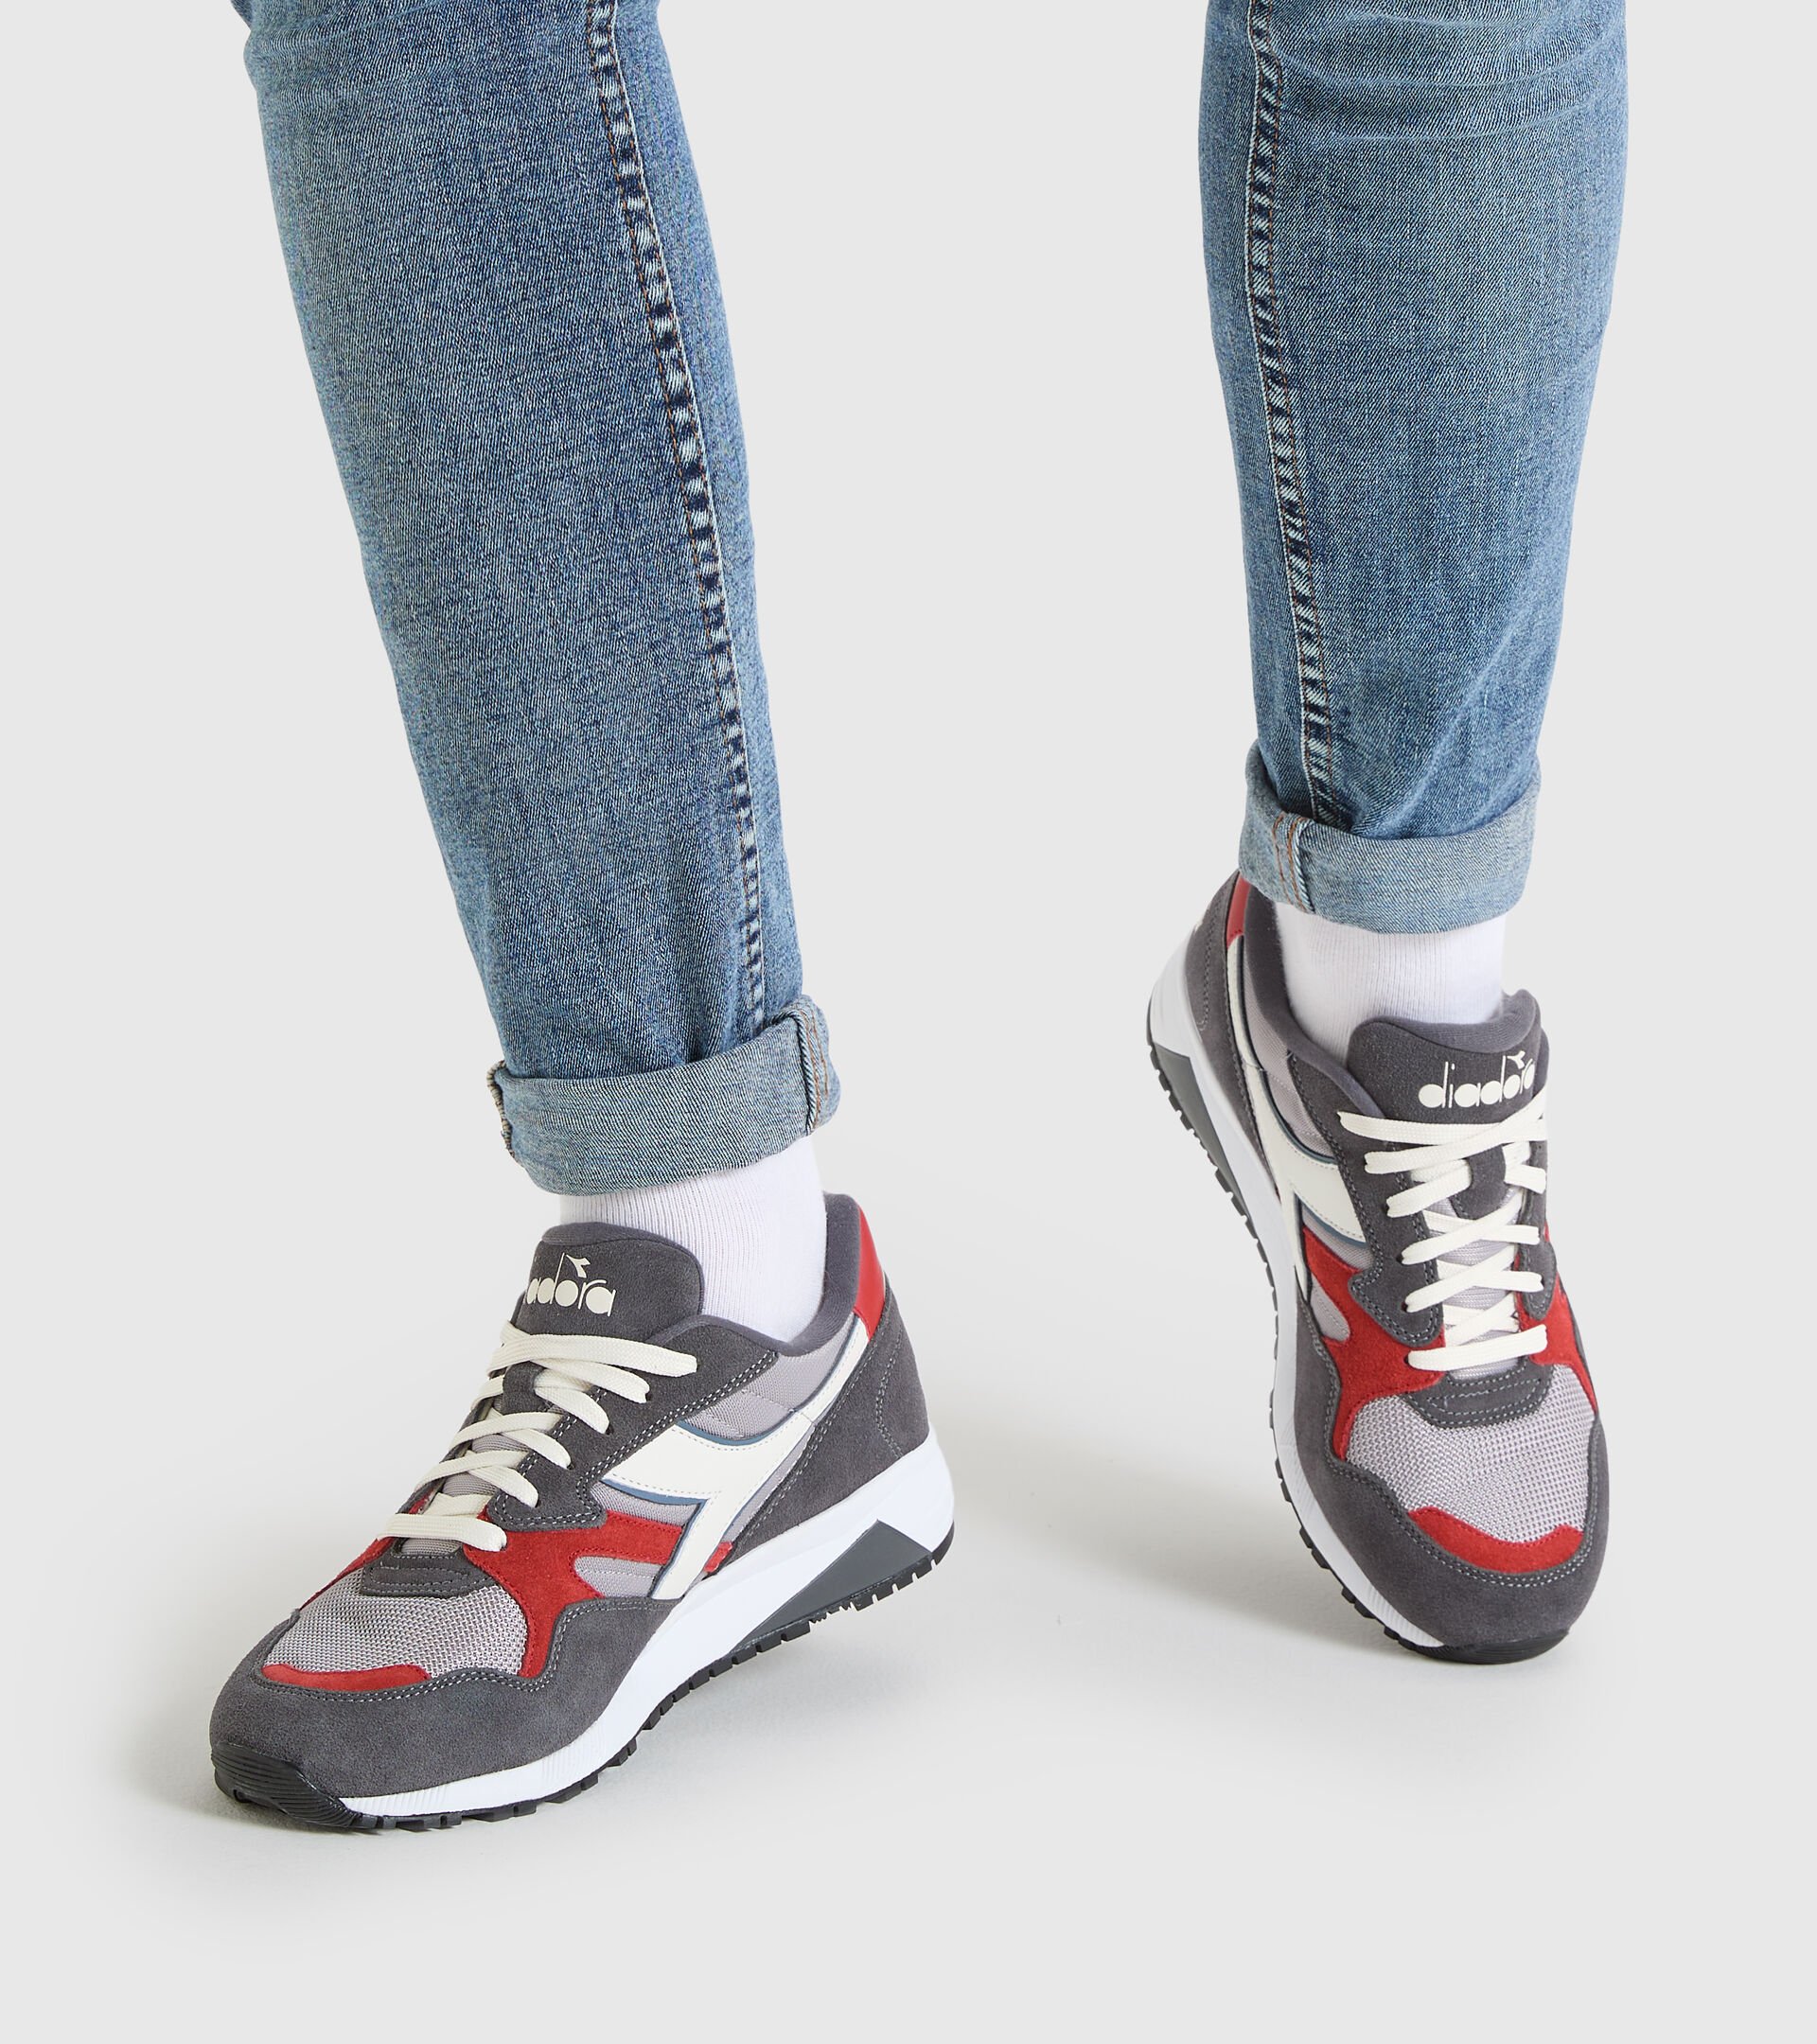 Chaussures de sportswear - Gender neutral N902 GOELAND/EBENE - Diadora